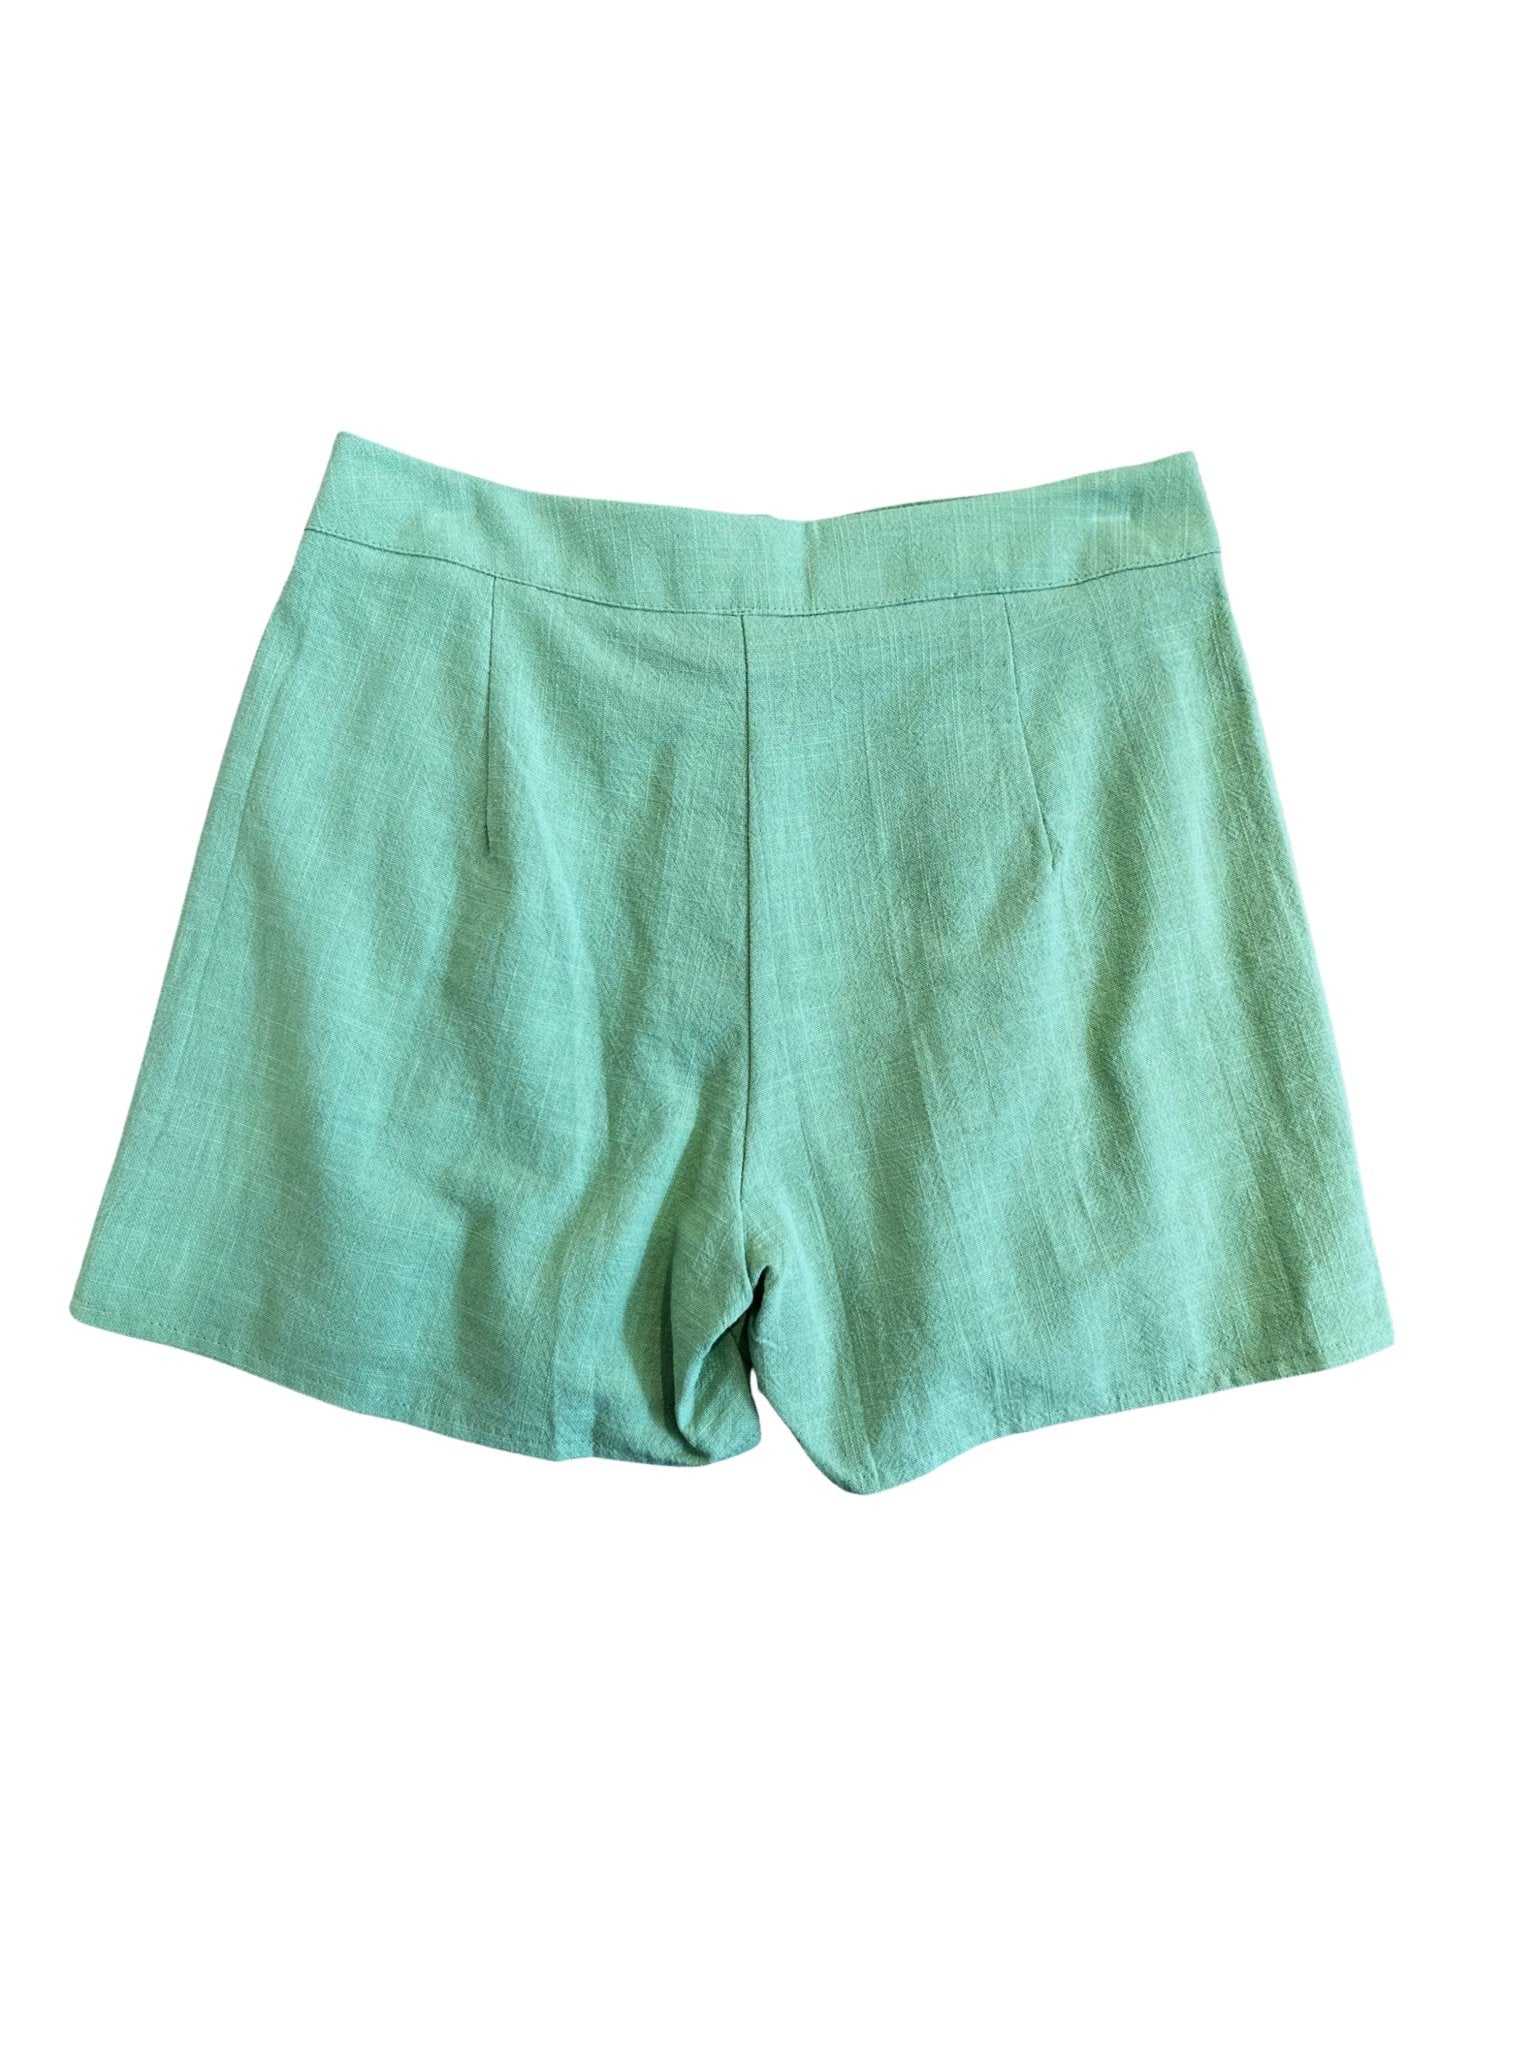 100% Organic Fabric Skort - Green - Bottom - LussoCA